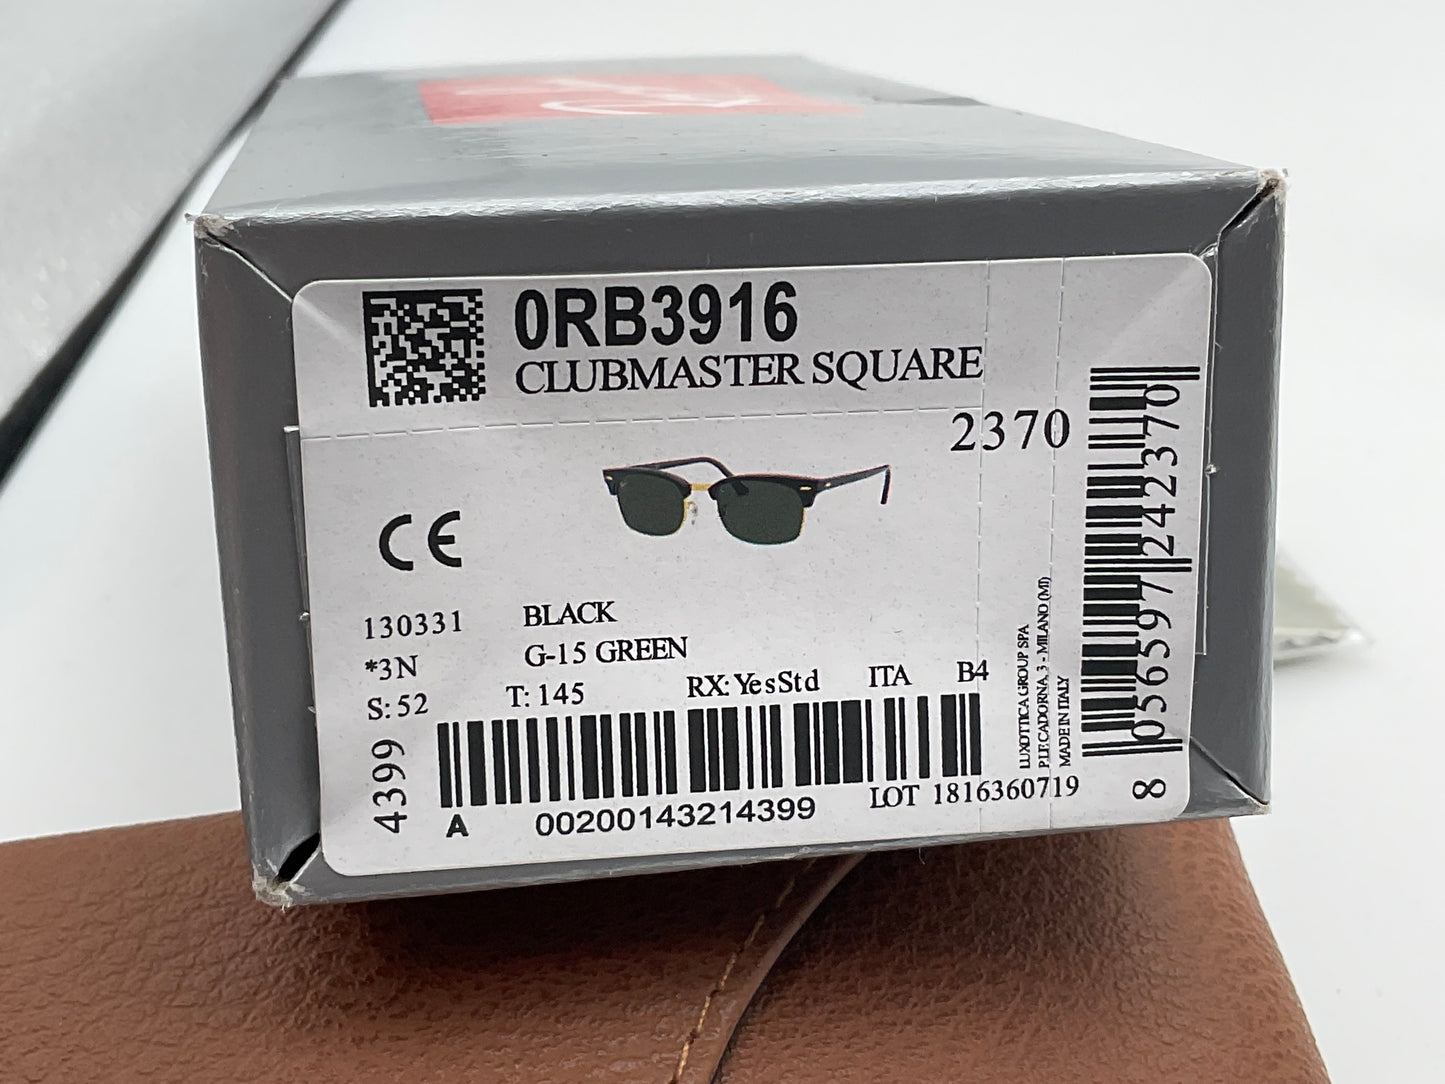 Ray Ban RB 3916 130331 Black G-15 Classic Sunglasses 52MM